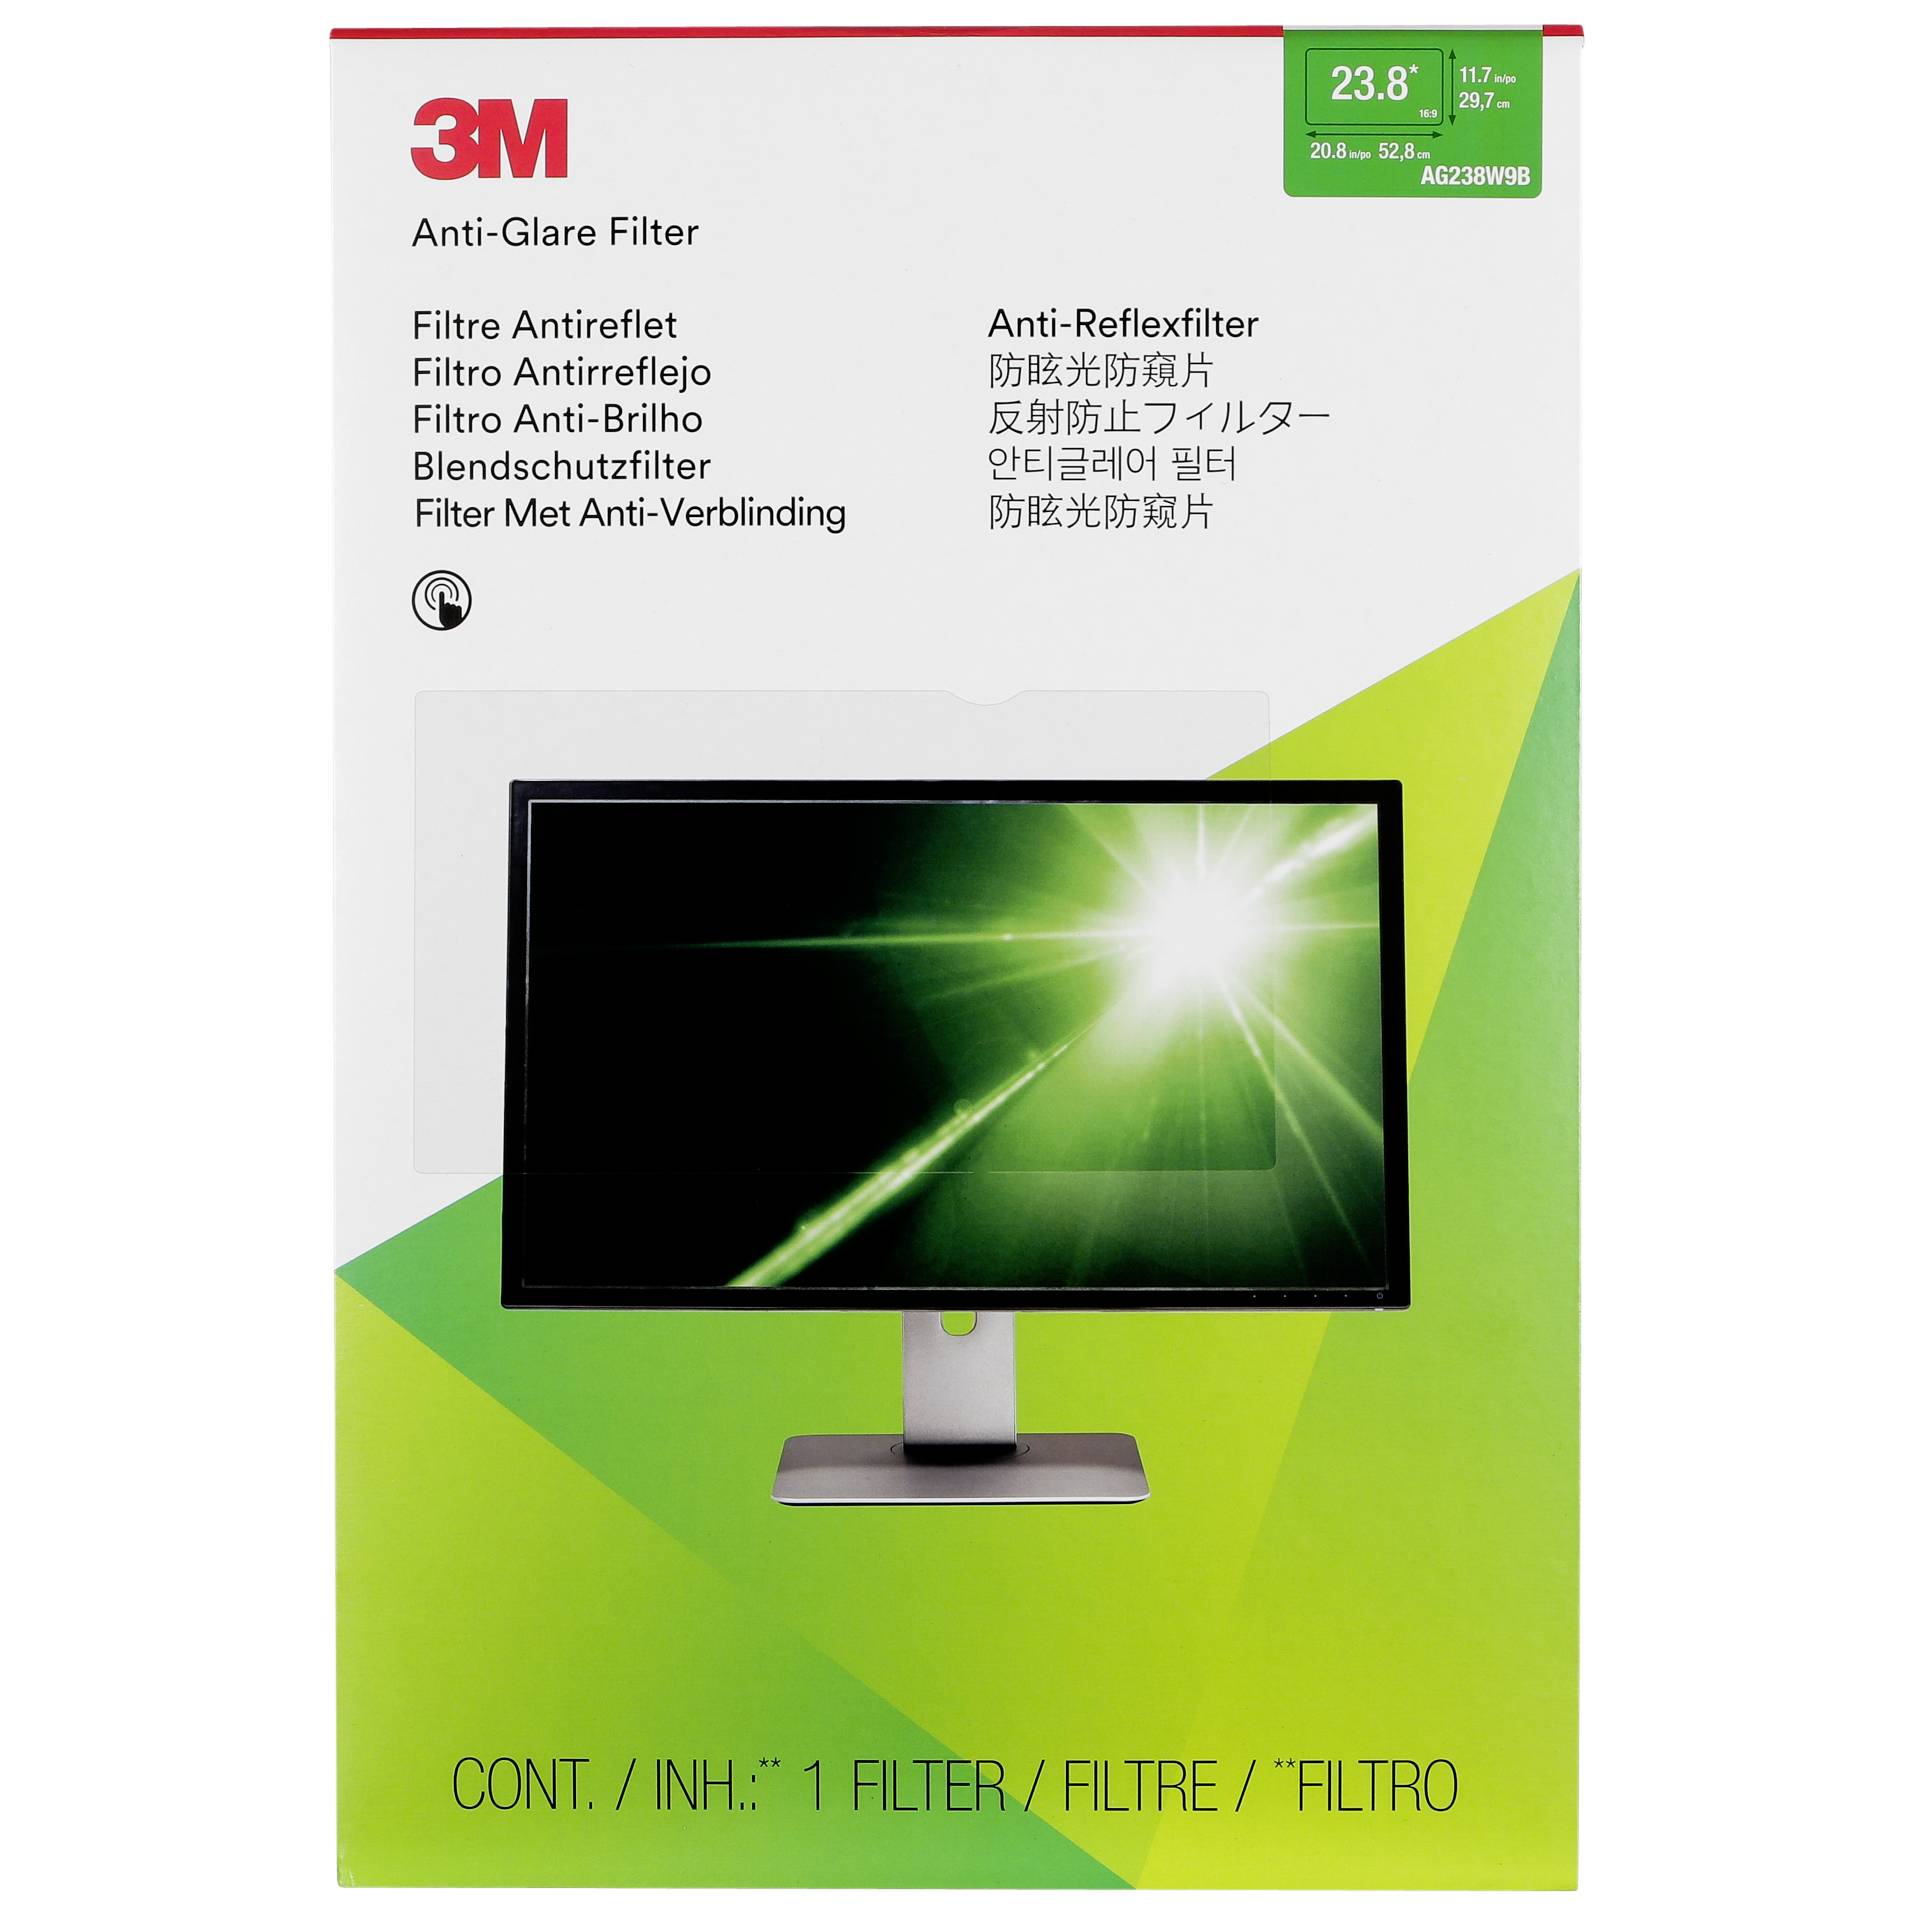 3M AG238W9B Filtro antiriflesso per LCD Widescreen Monitor 2